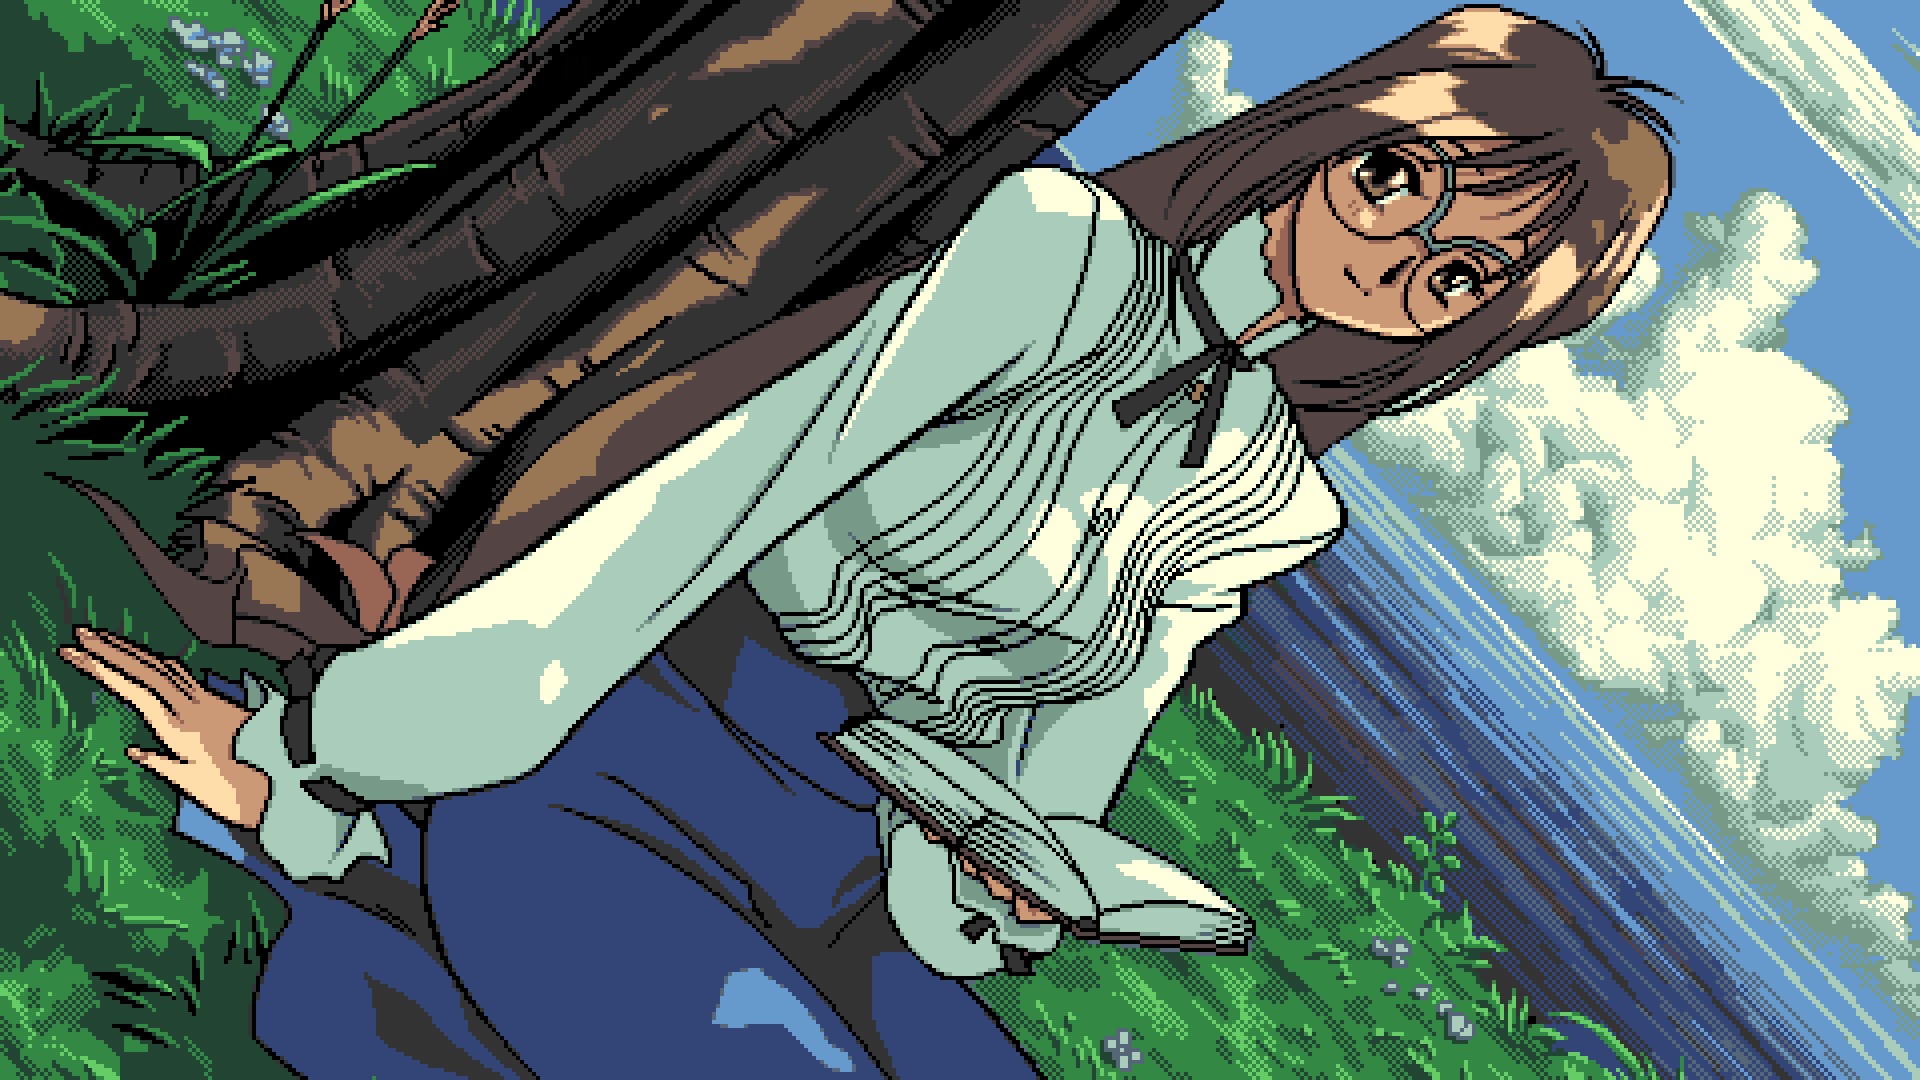 PC 98 Pixel Art Anime Girls Digital Art Game CG Sitting Glasses Trees Looking At Viewer Clouds Water 1920x1080